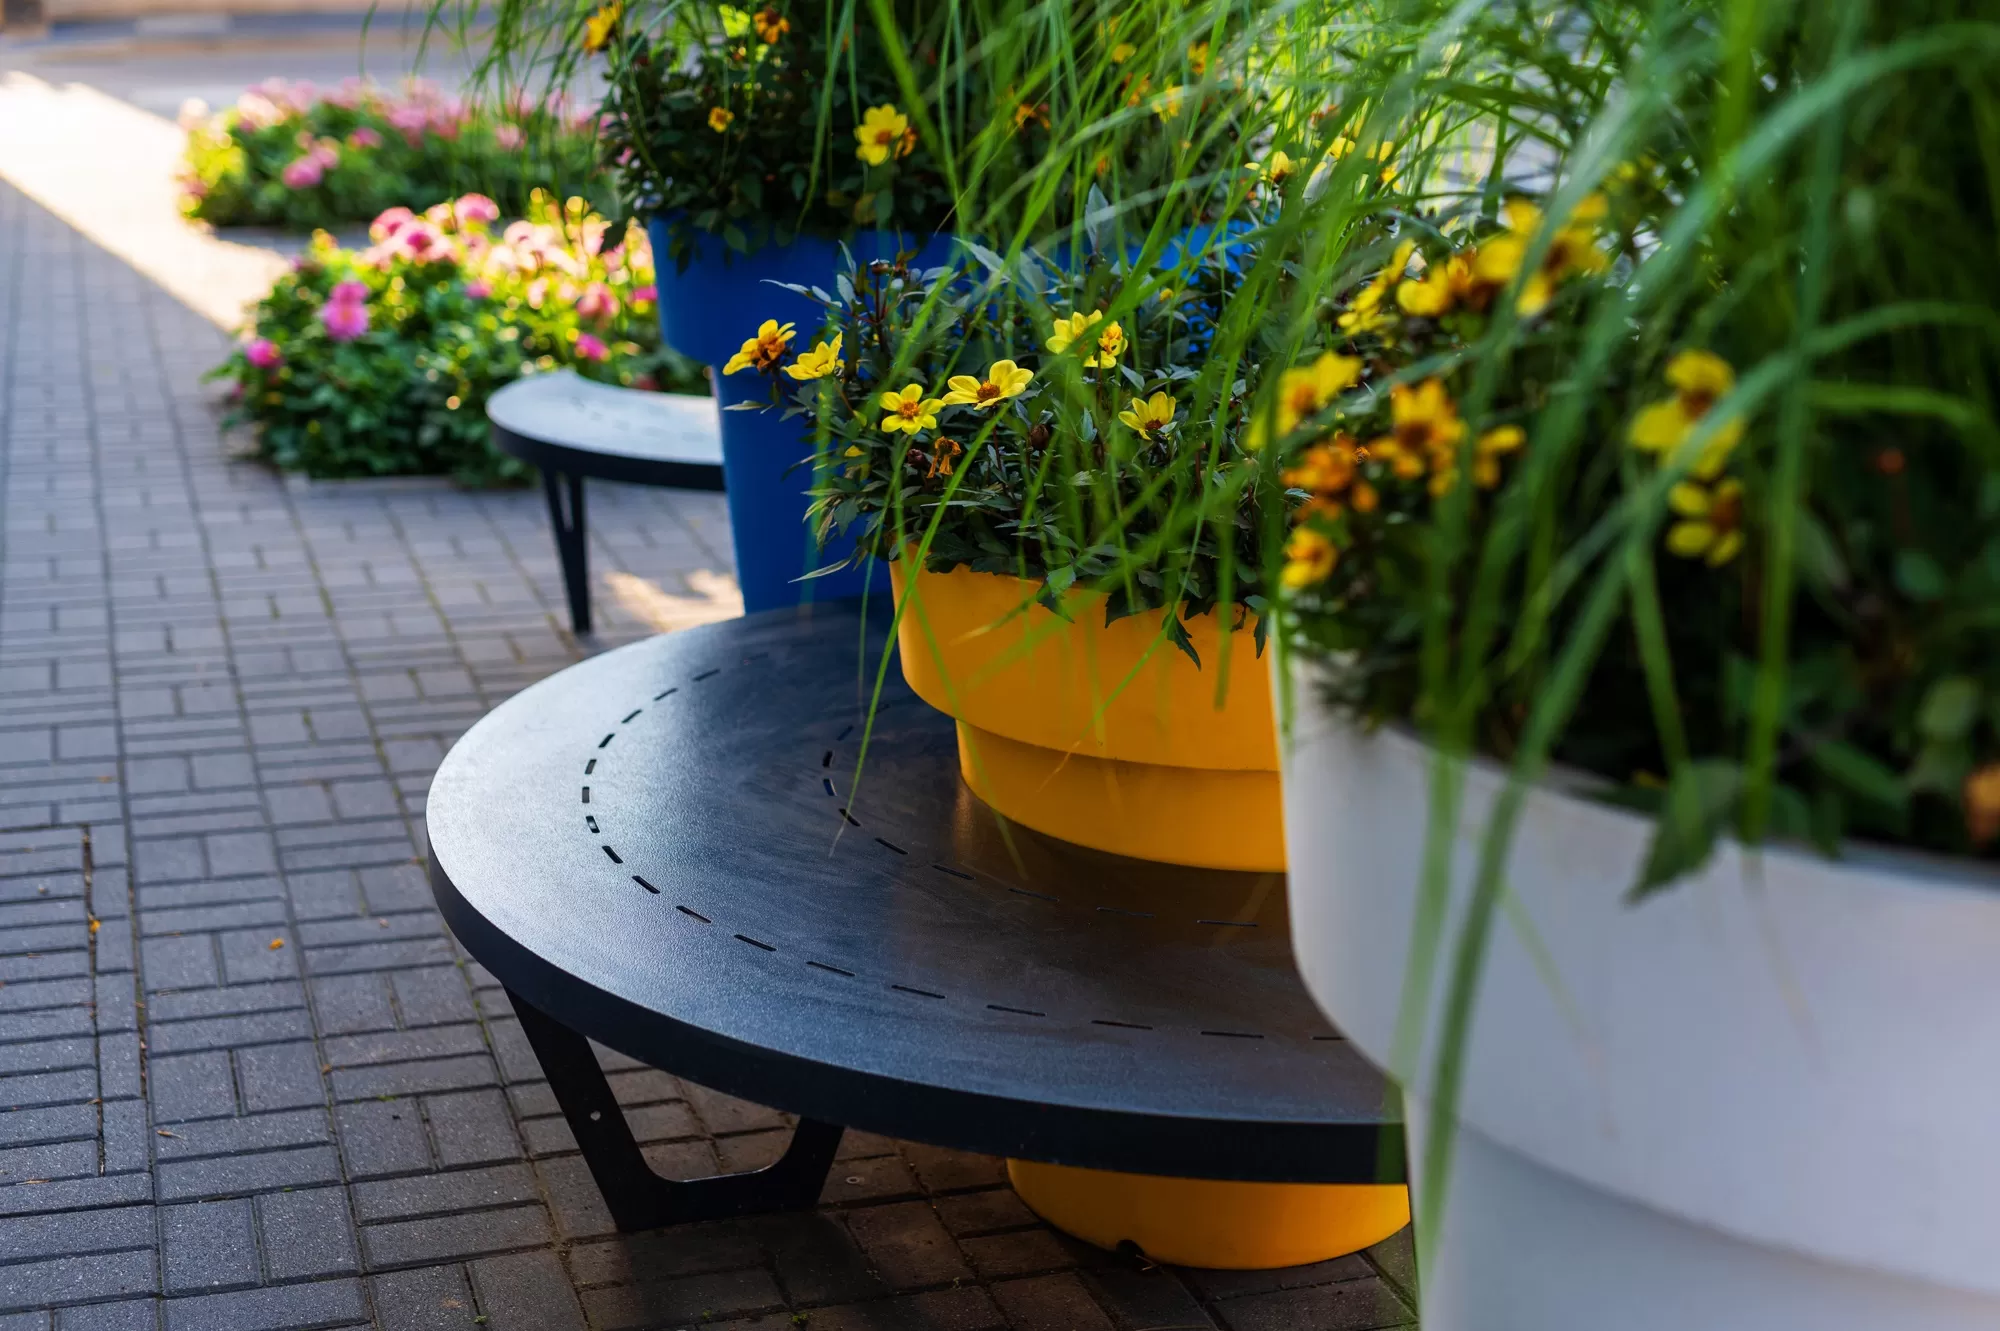 Modern public bench with a flower pot